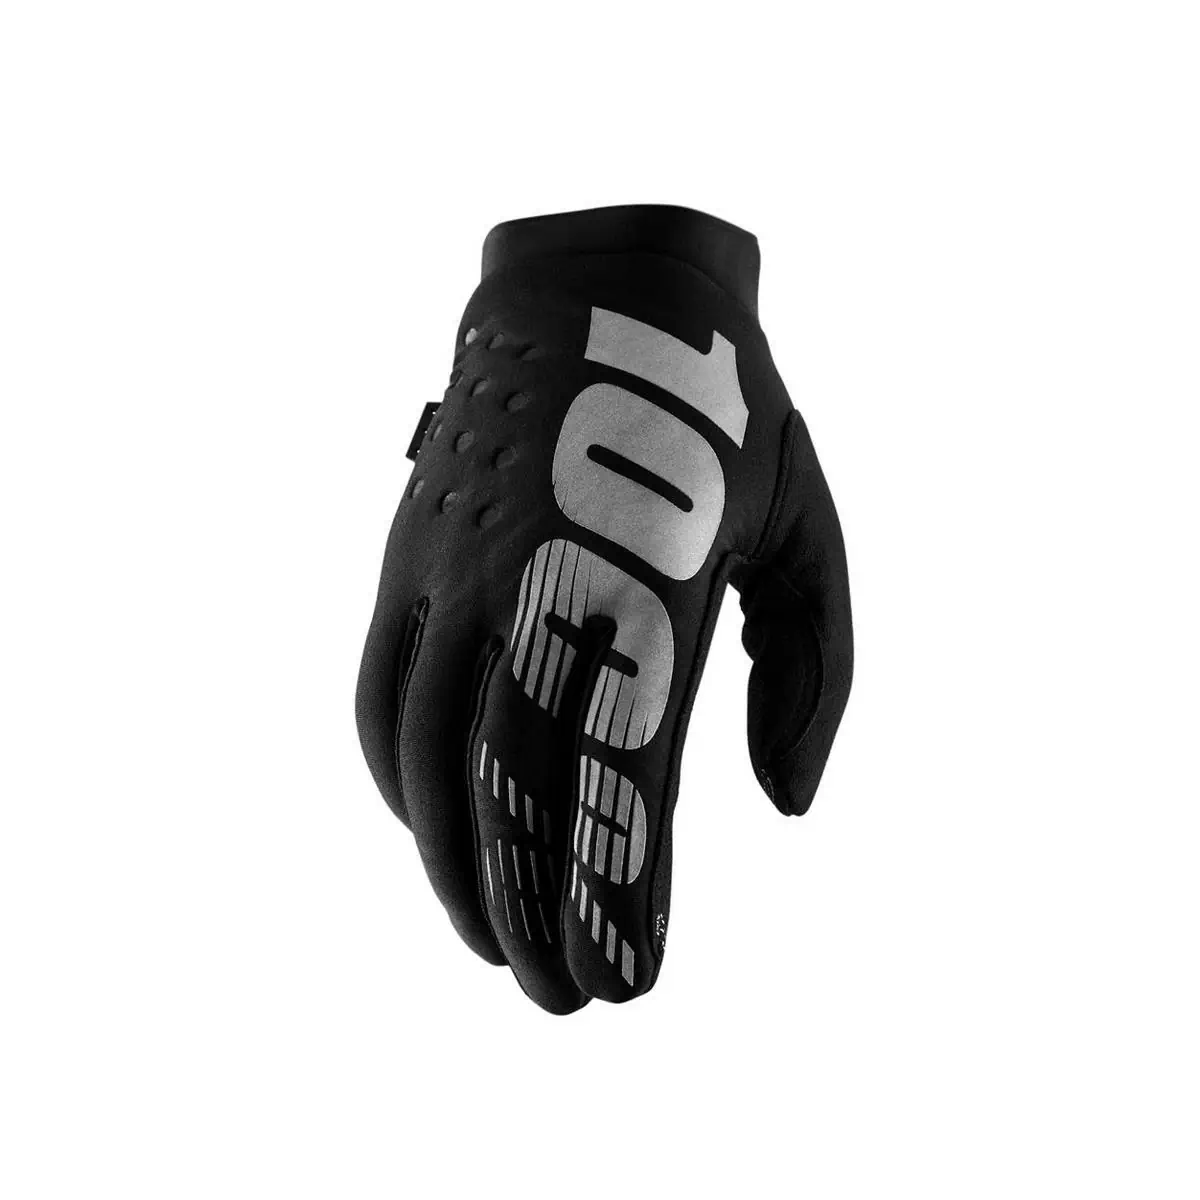 Winter gloves brisker black size XXL - image